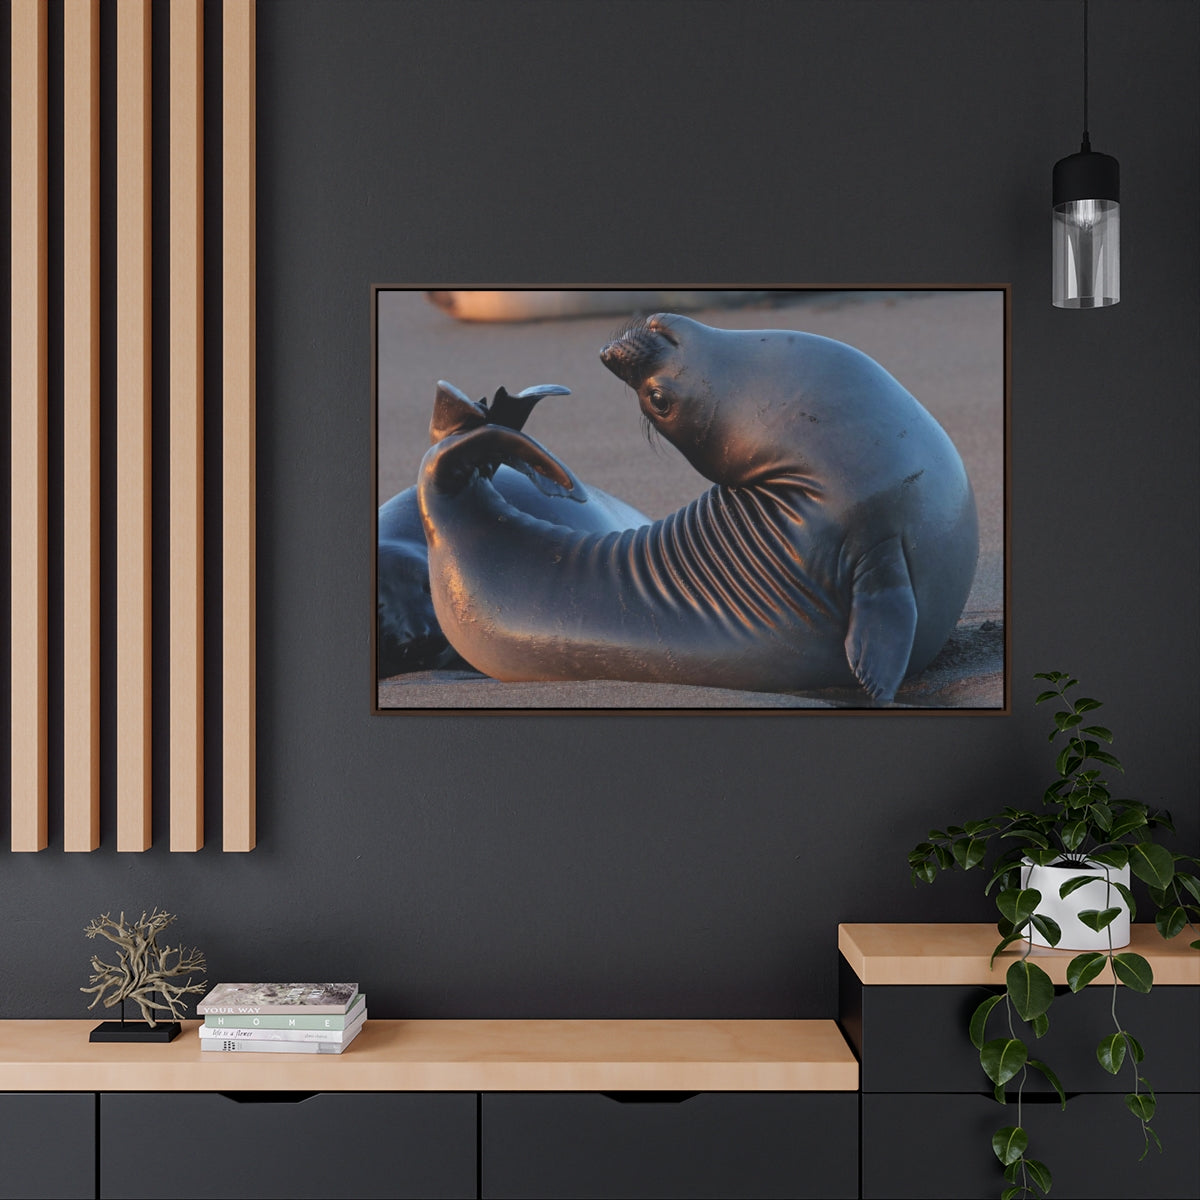 Seal Yoga Canvas Print